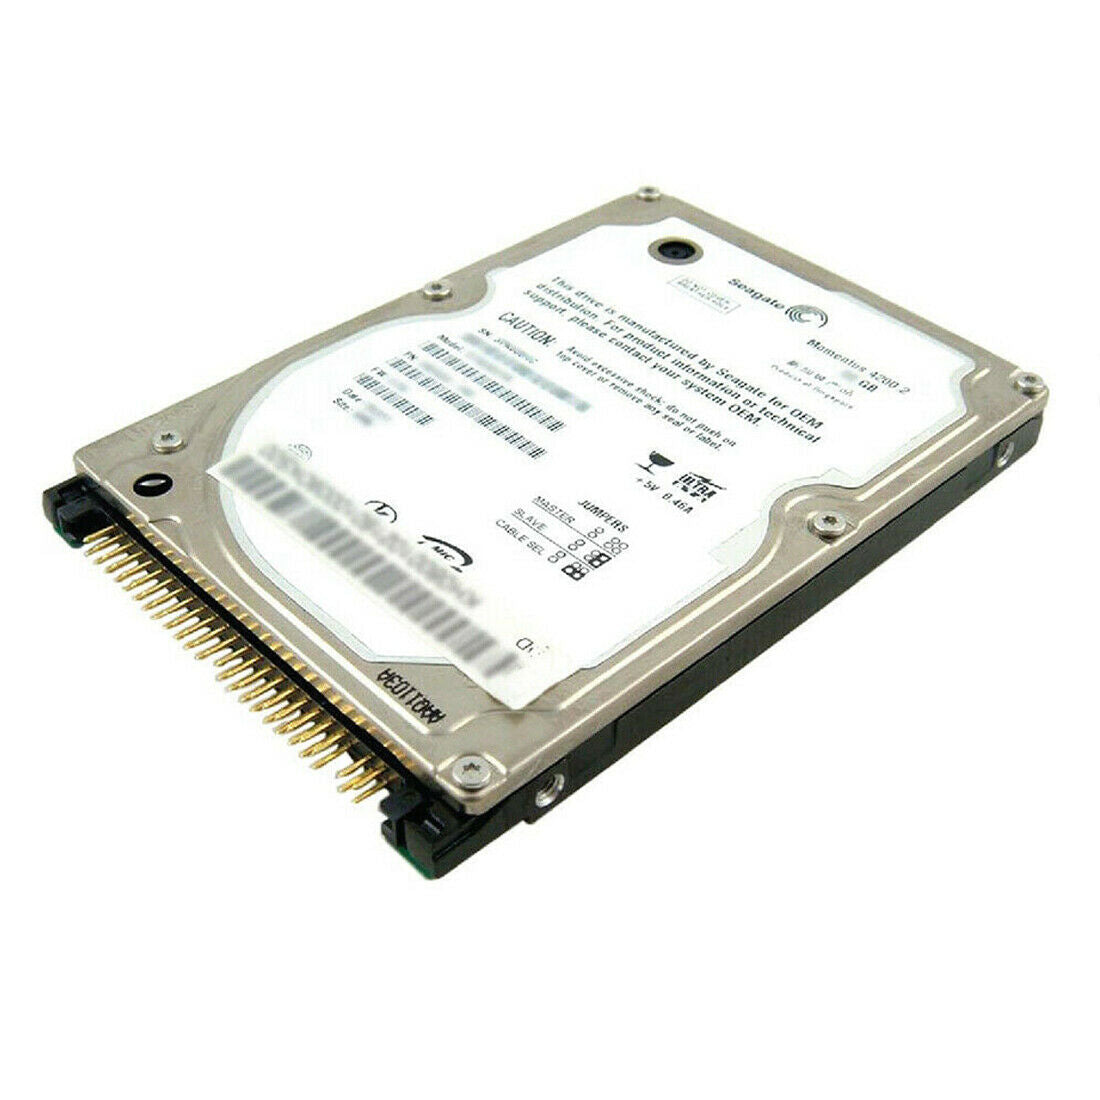 Seagate 2.5" Laptop Internal IDE Hard Drive 40GB 5400rpm 2MB ATA-100, ST9402115A